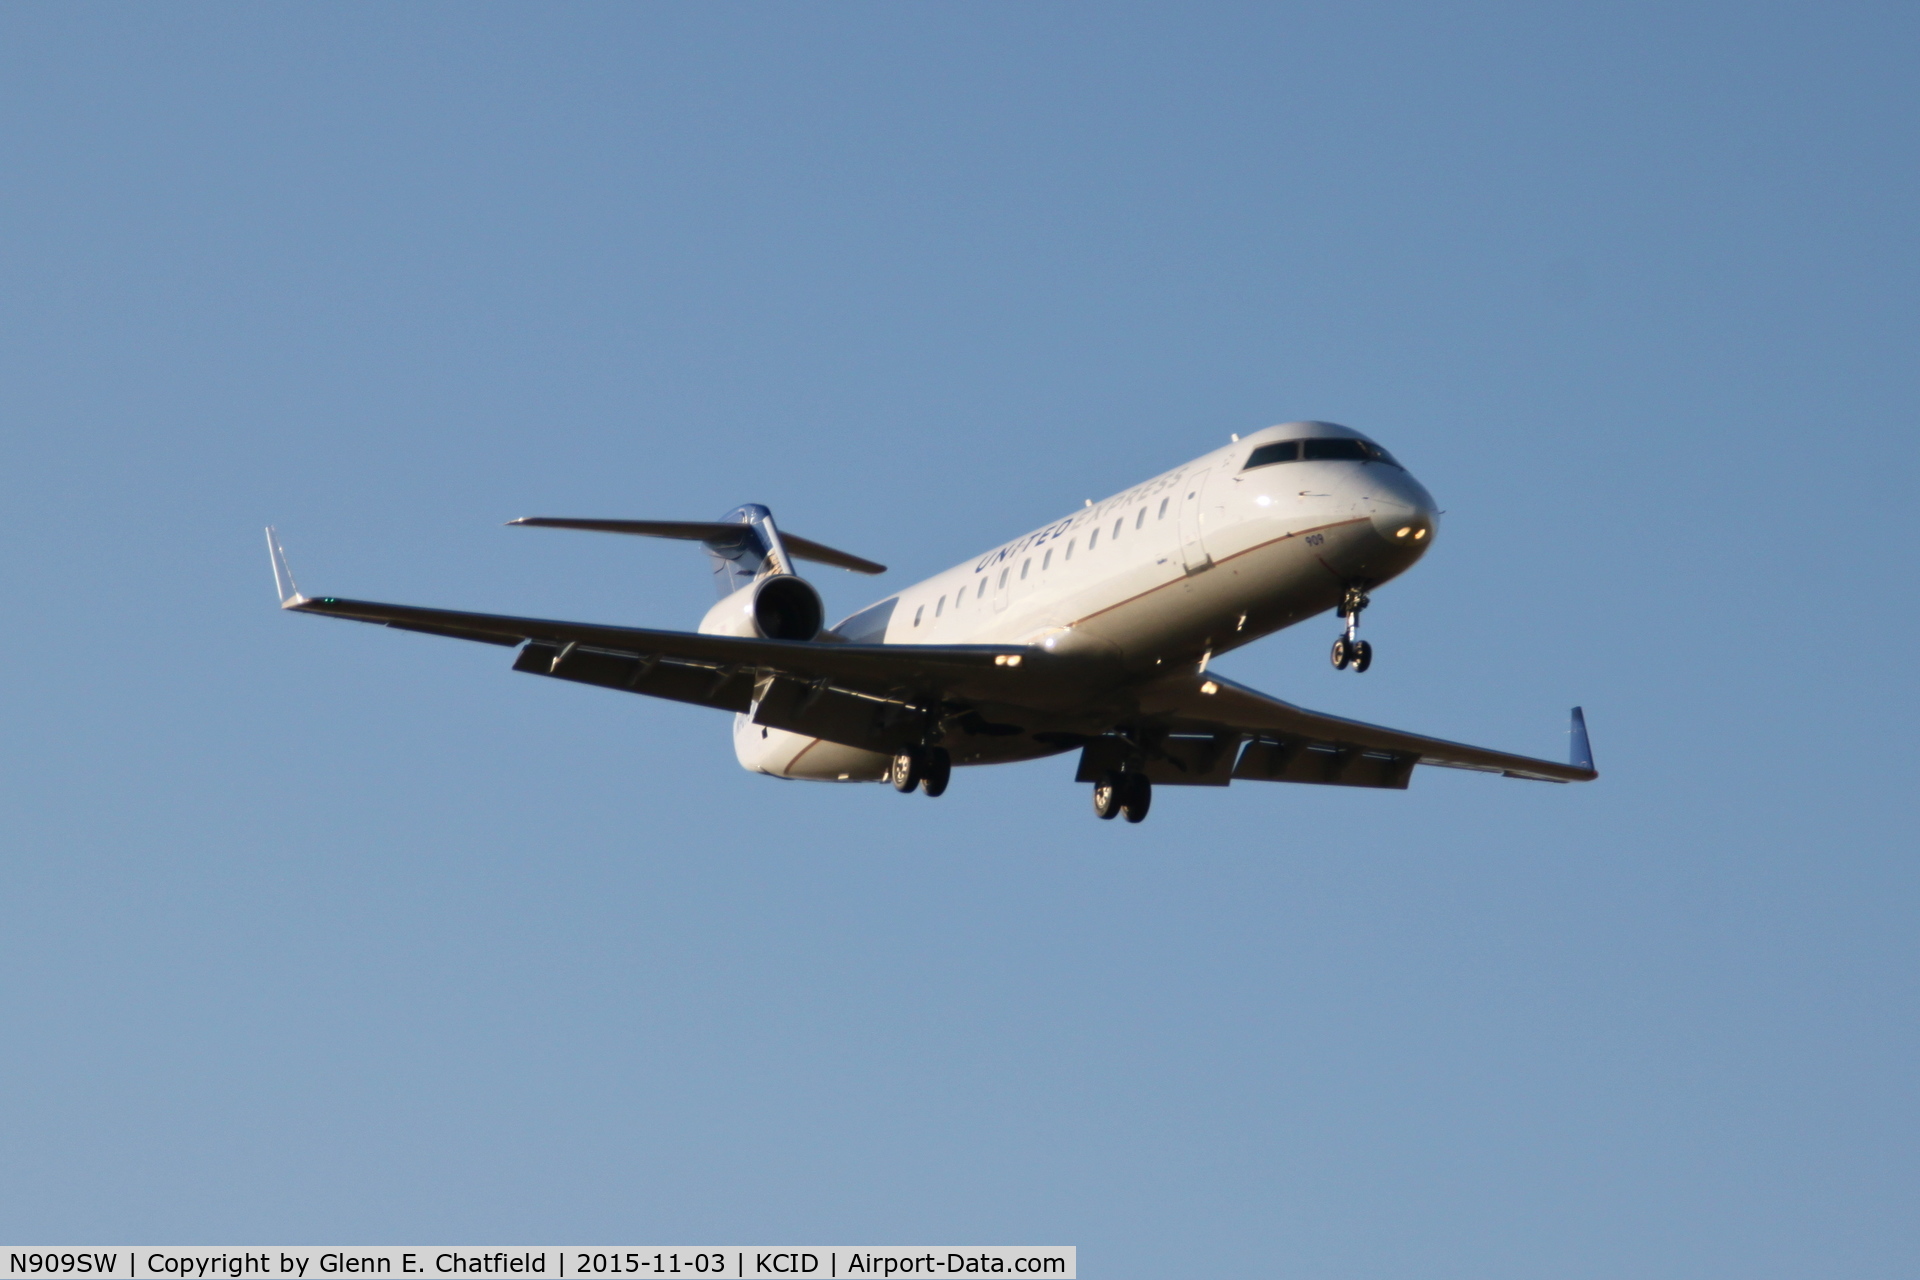 N909SW, 2001 Bombardier CRJ-200LR (CL-600-2B19) C/N 7558, Final approach to Runway 9